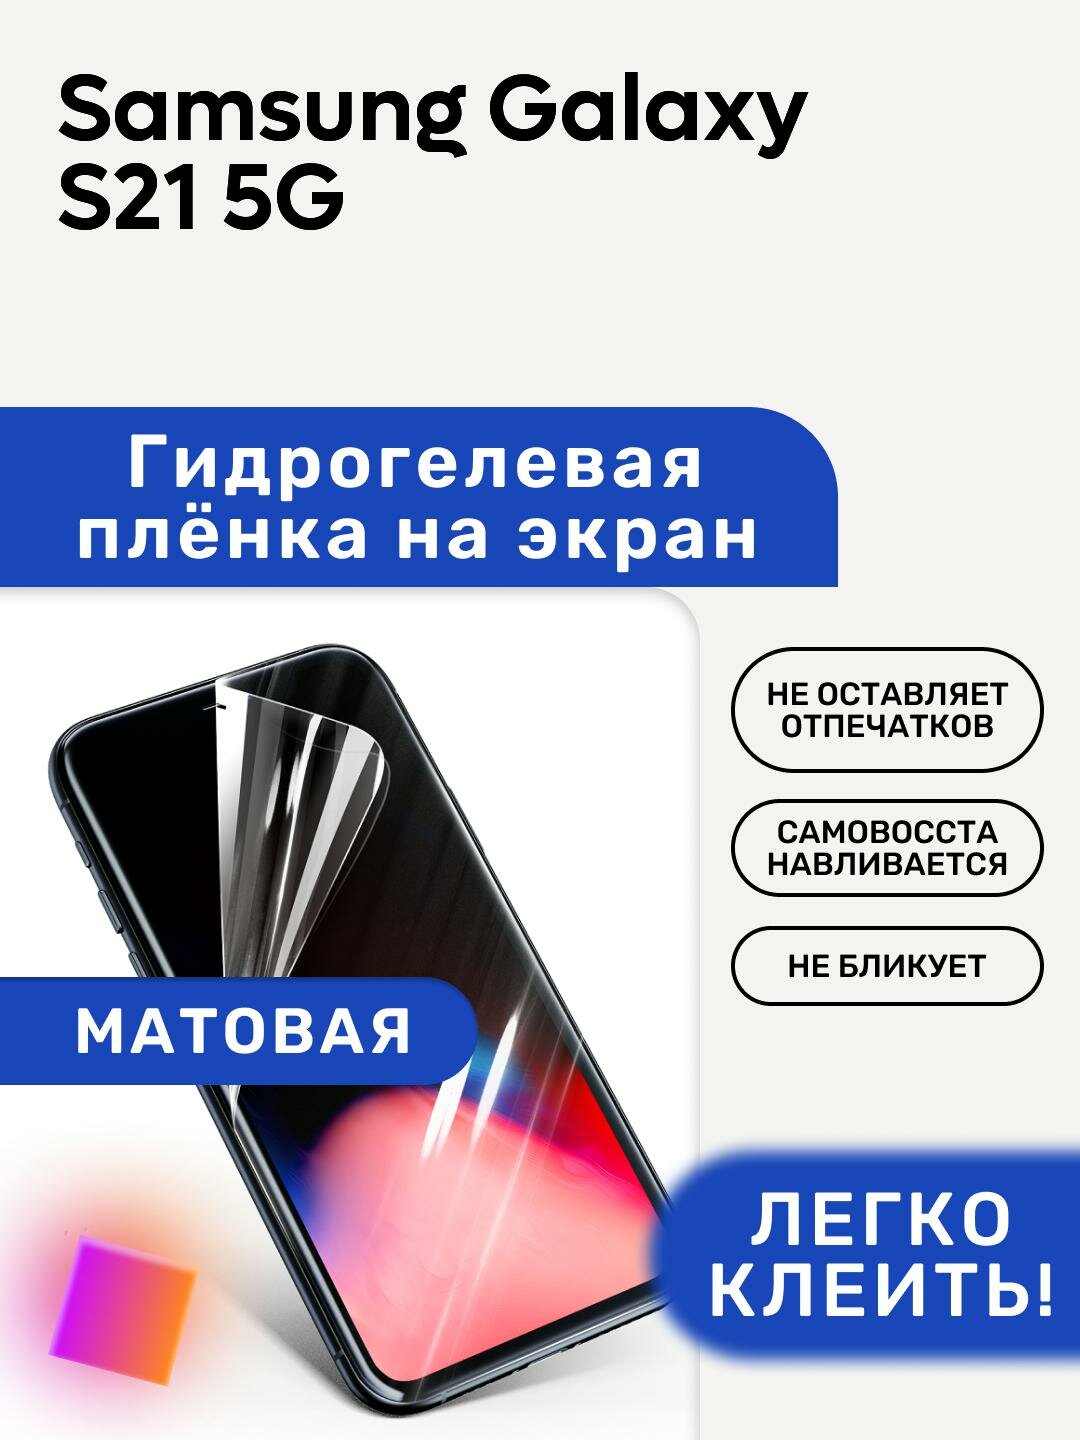 Матовая Гидрогелевая плёнка, полиуретановая, защита экрана Samsung Galaxy S21 5G